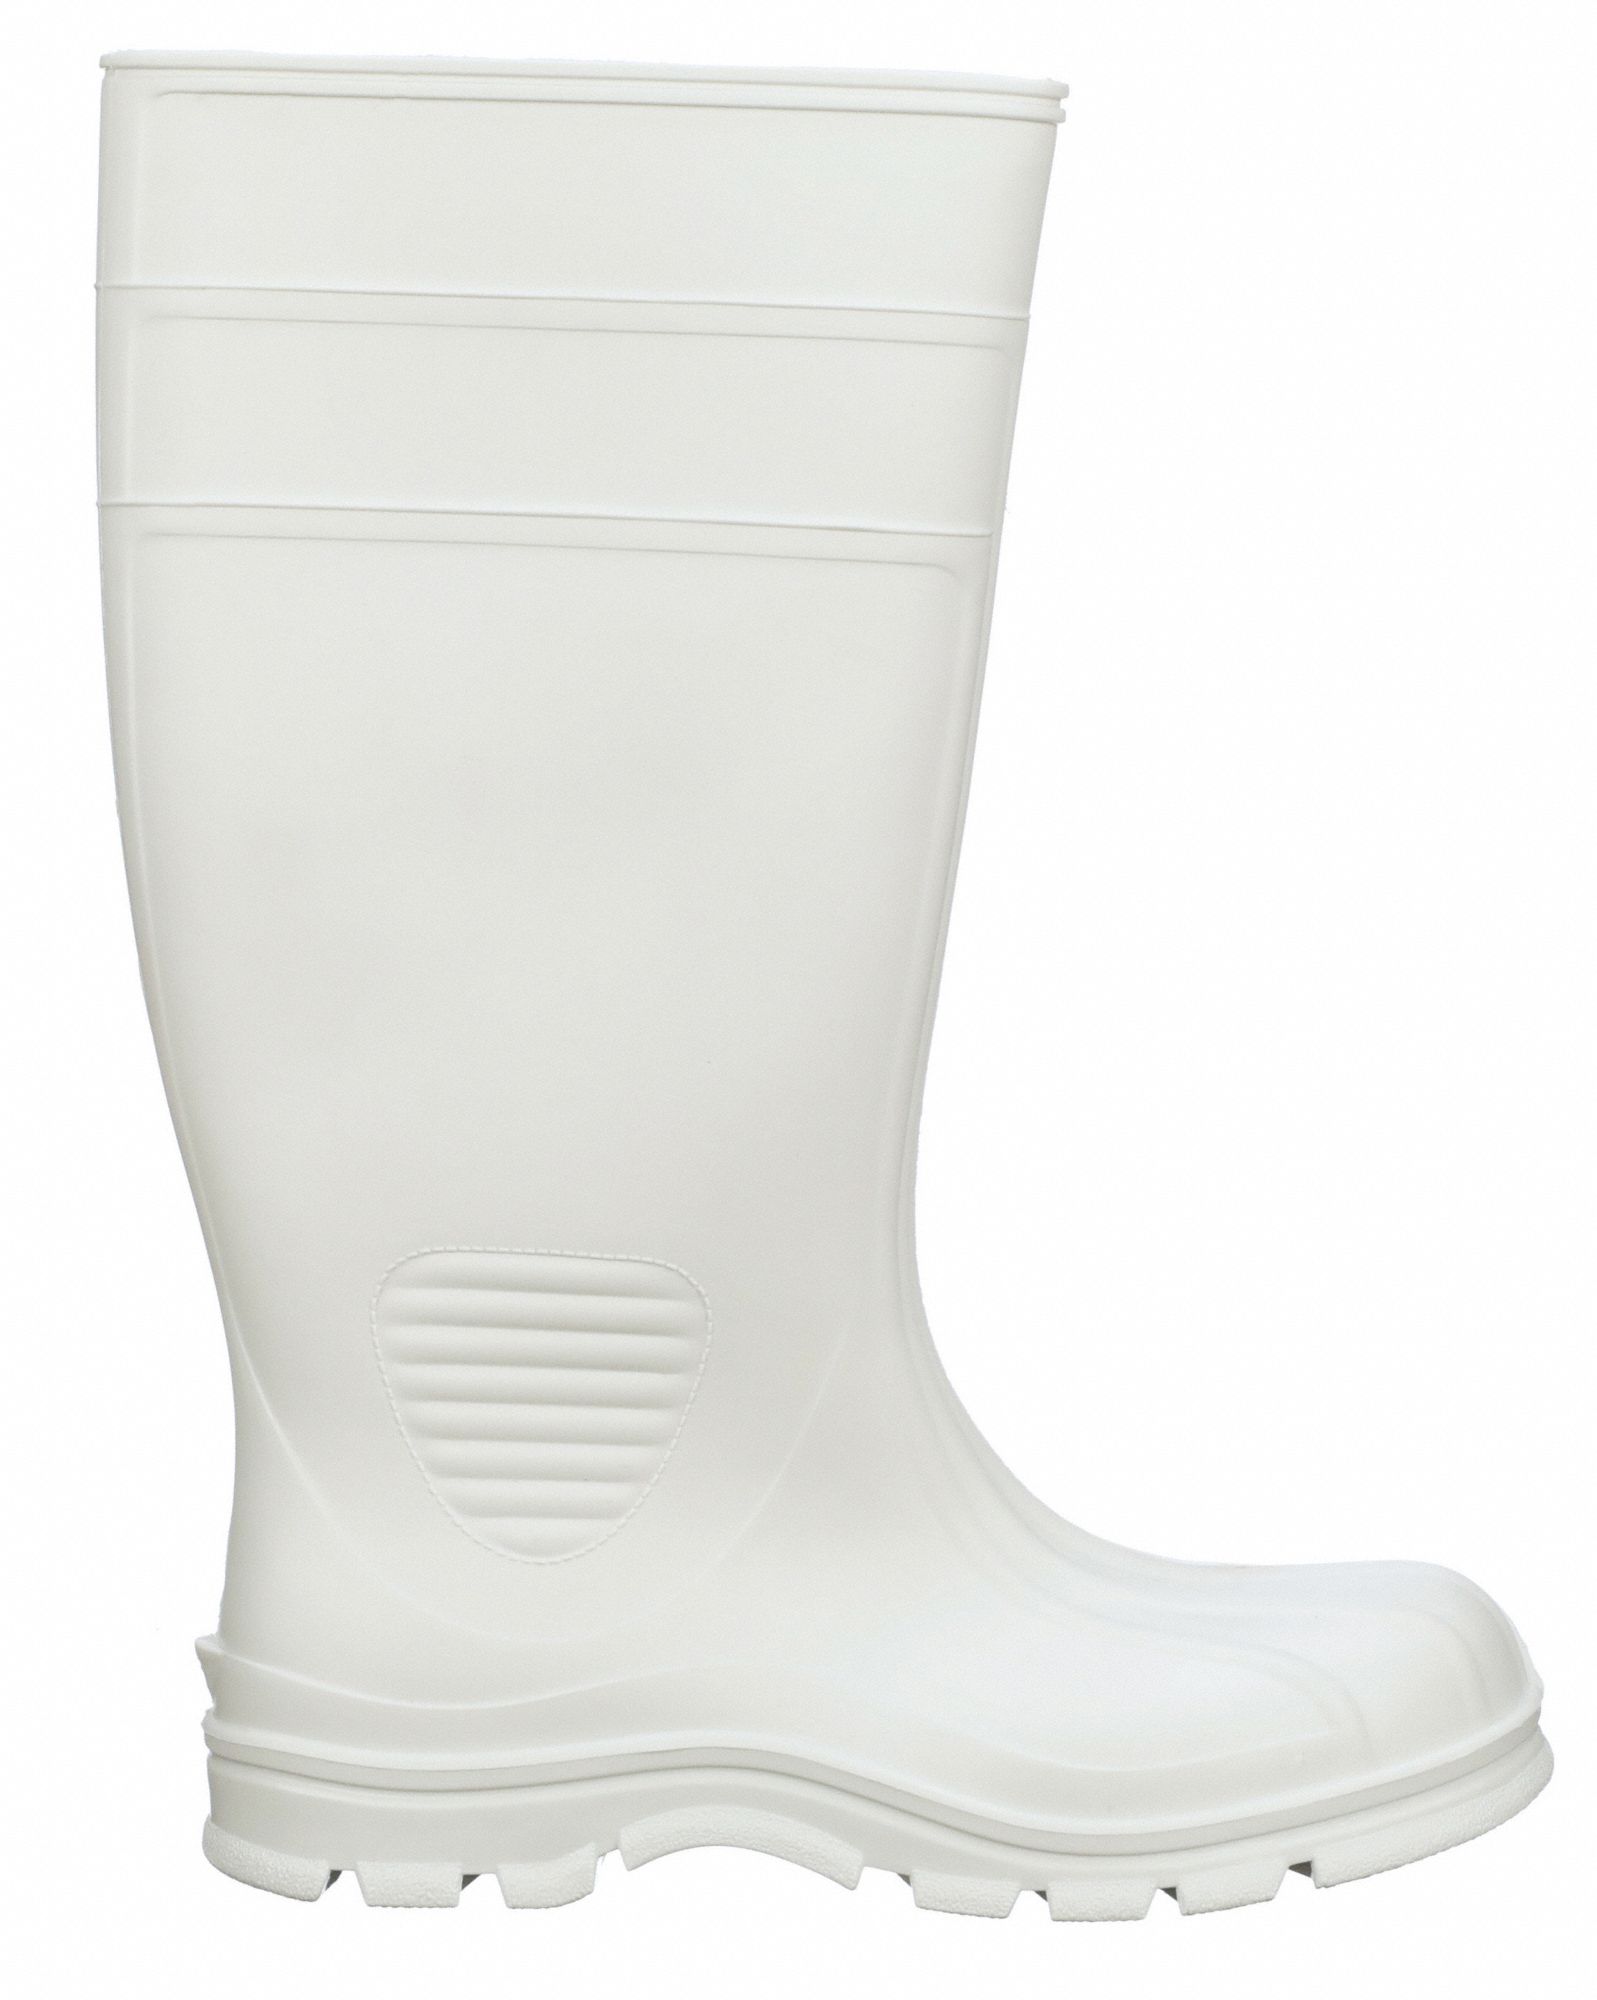 TALON TRAX Rubber Boot, Men's, 7, Knee, Steel Toe Type, PVC, White, 1 PR - 45DZ24|45DZ24 - Grainger